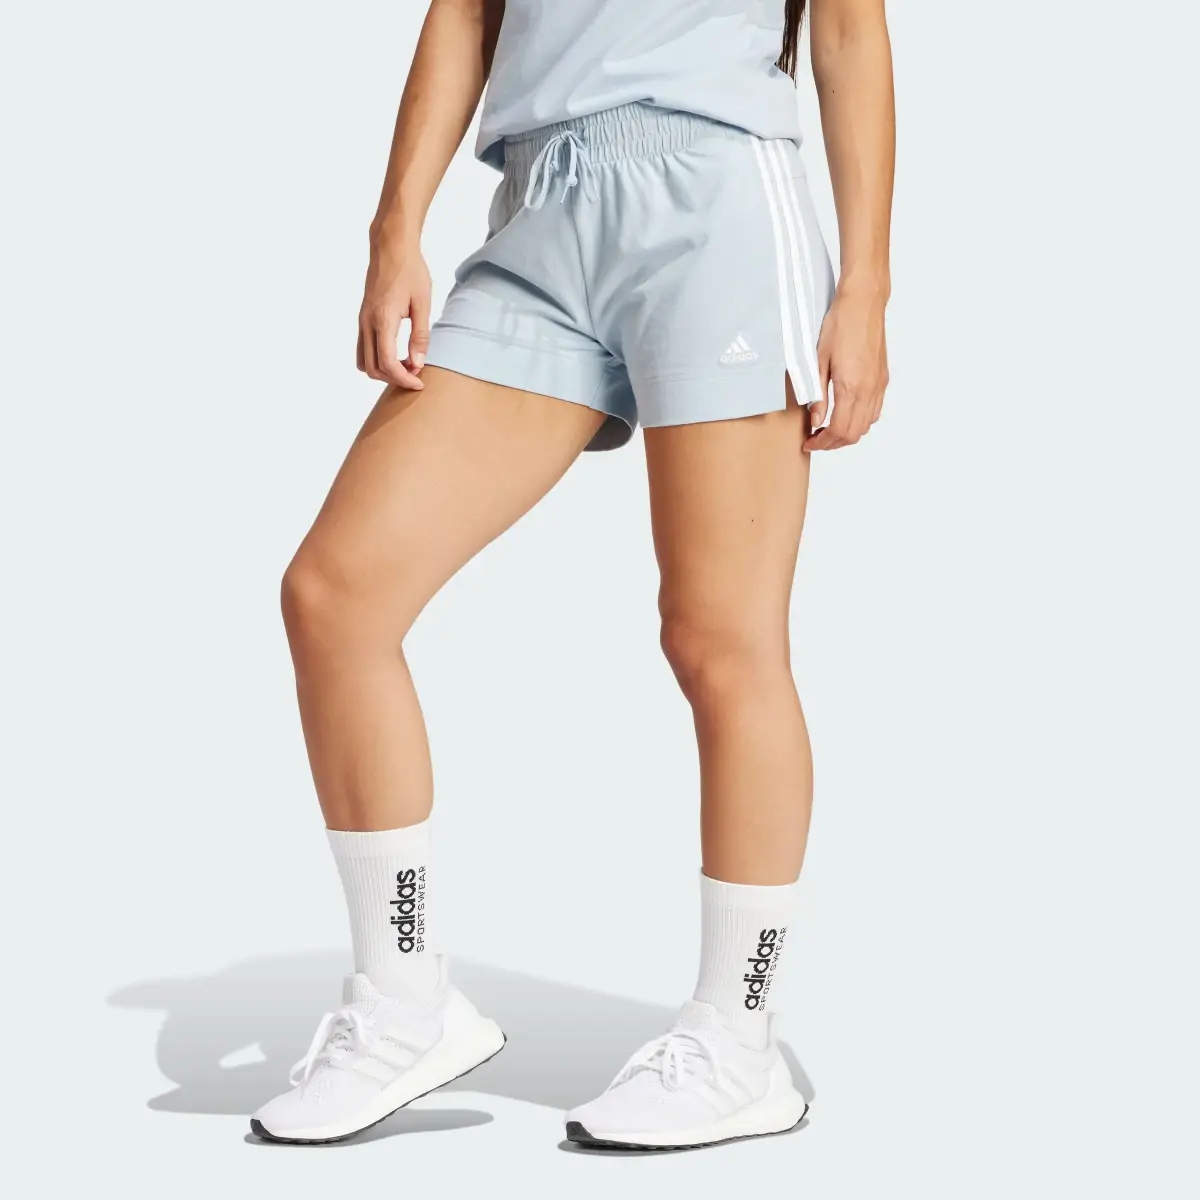 Adidas Essentials Slim 3-Stripes Shorts. 1